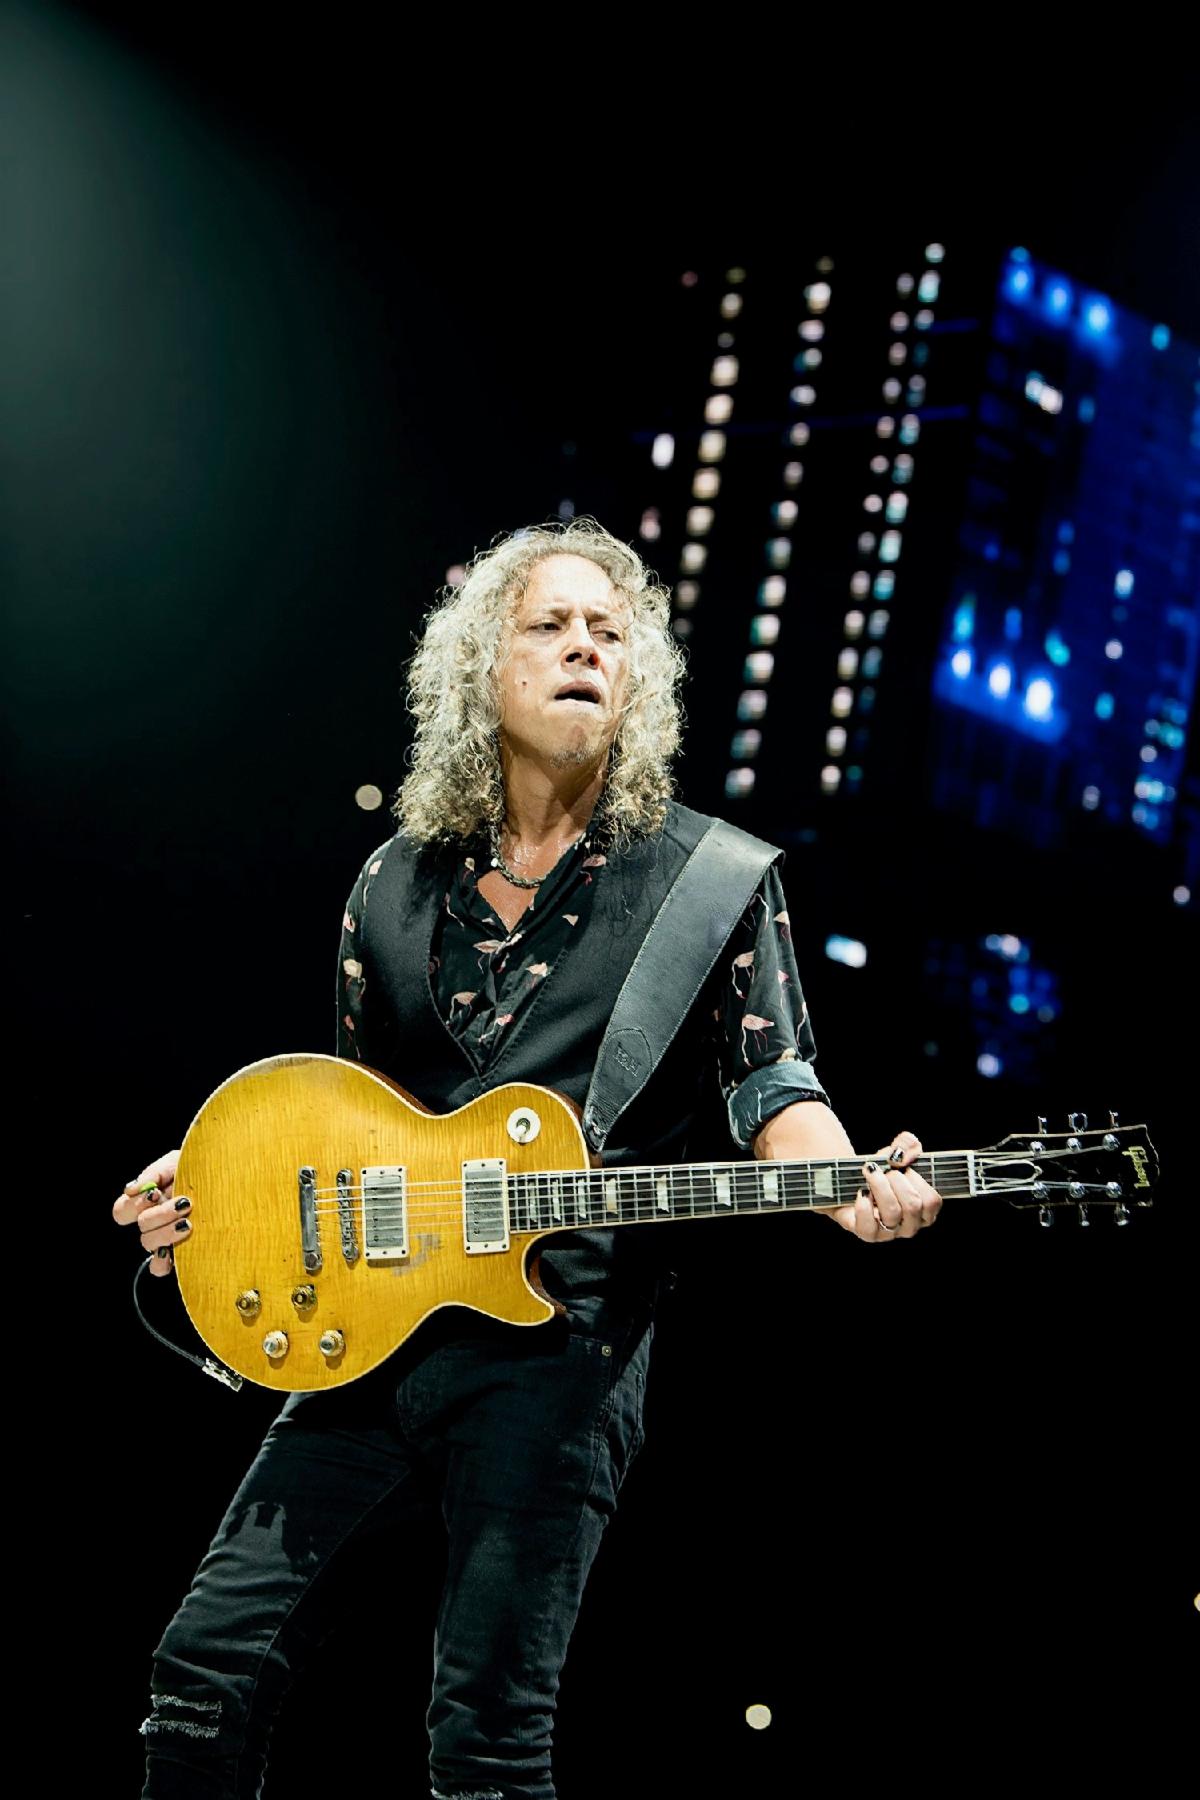 Gibson Announces Partnership with Kirk Hammett of Metallica